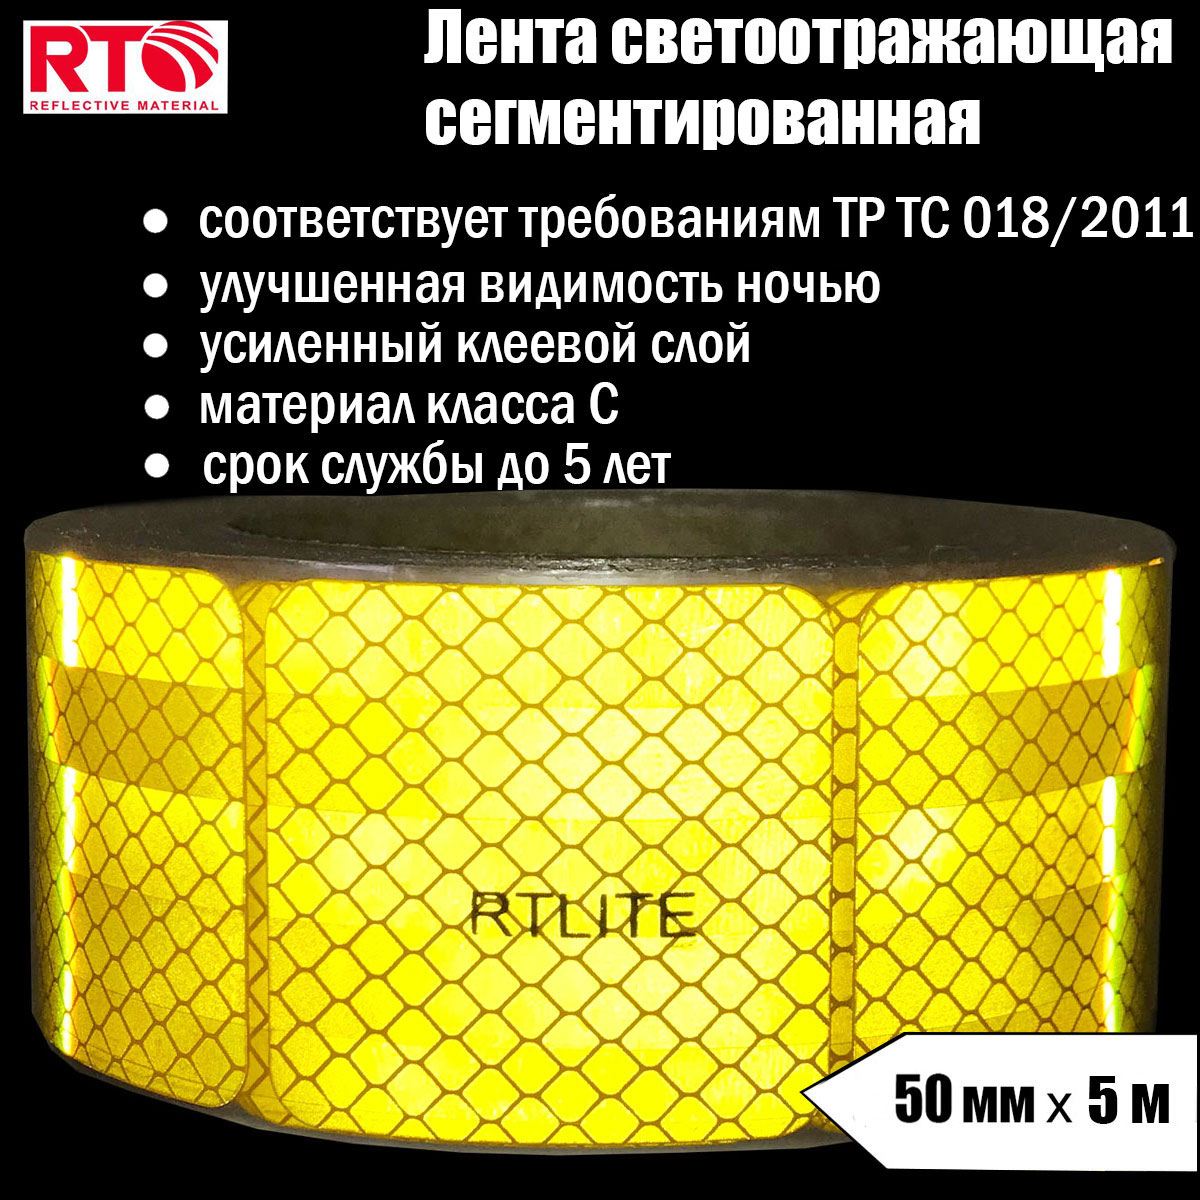 Лента светоотражающая сегментированная RTLITE RT-V104 для контурной маркировки, 50мм х 5м лента светоотражающая для контурной маркировки rtlite rt v104 50 8 мм х 5 м желтая